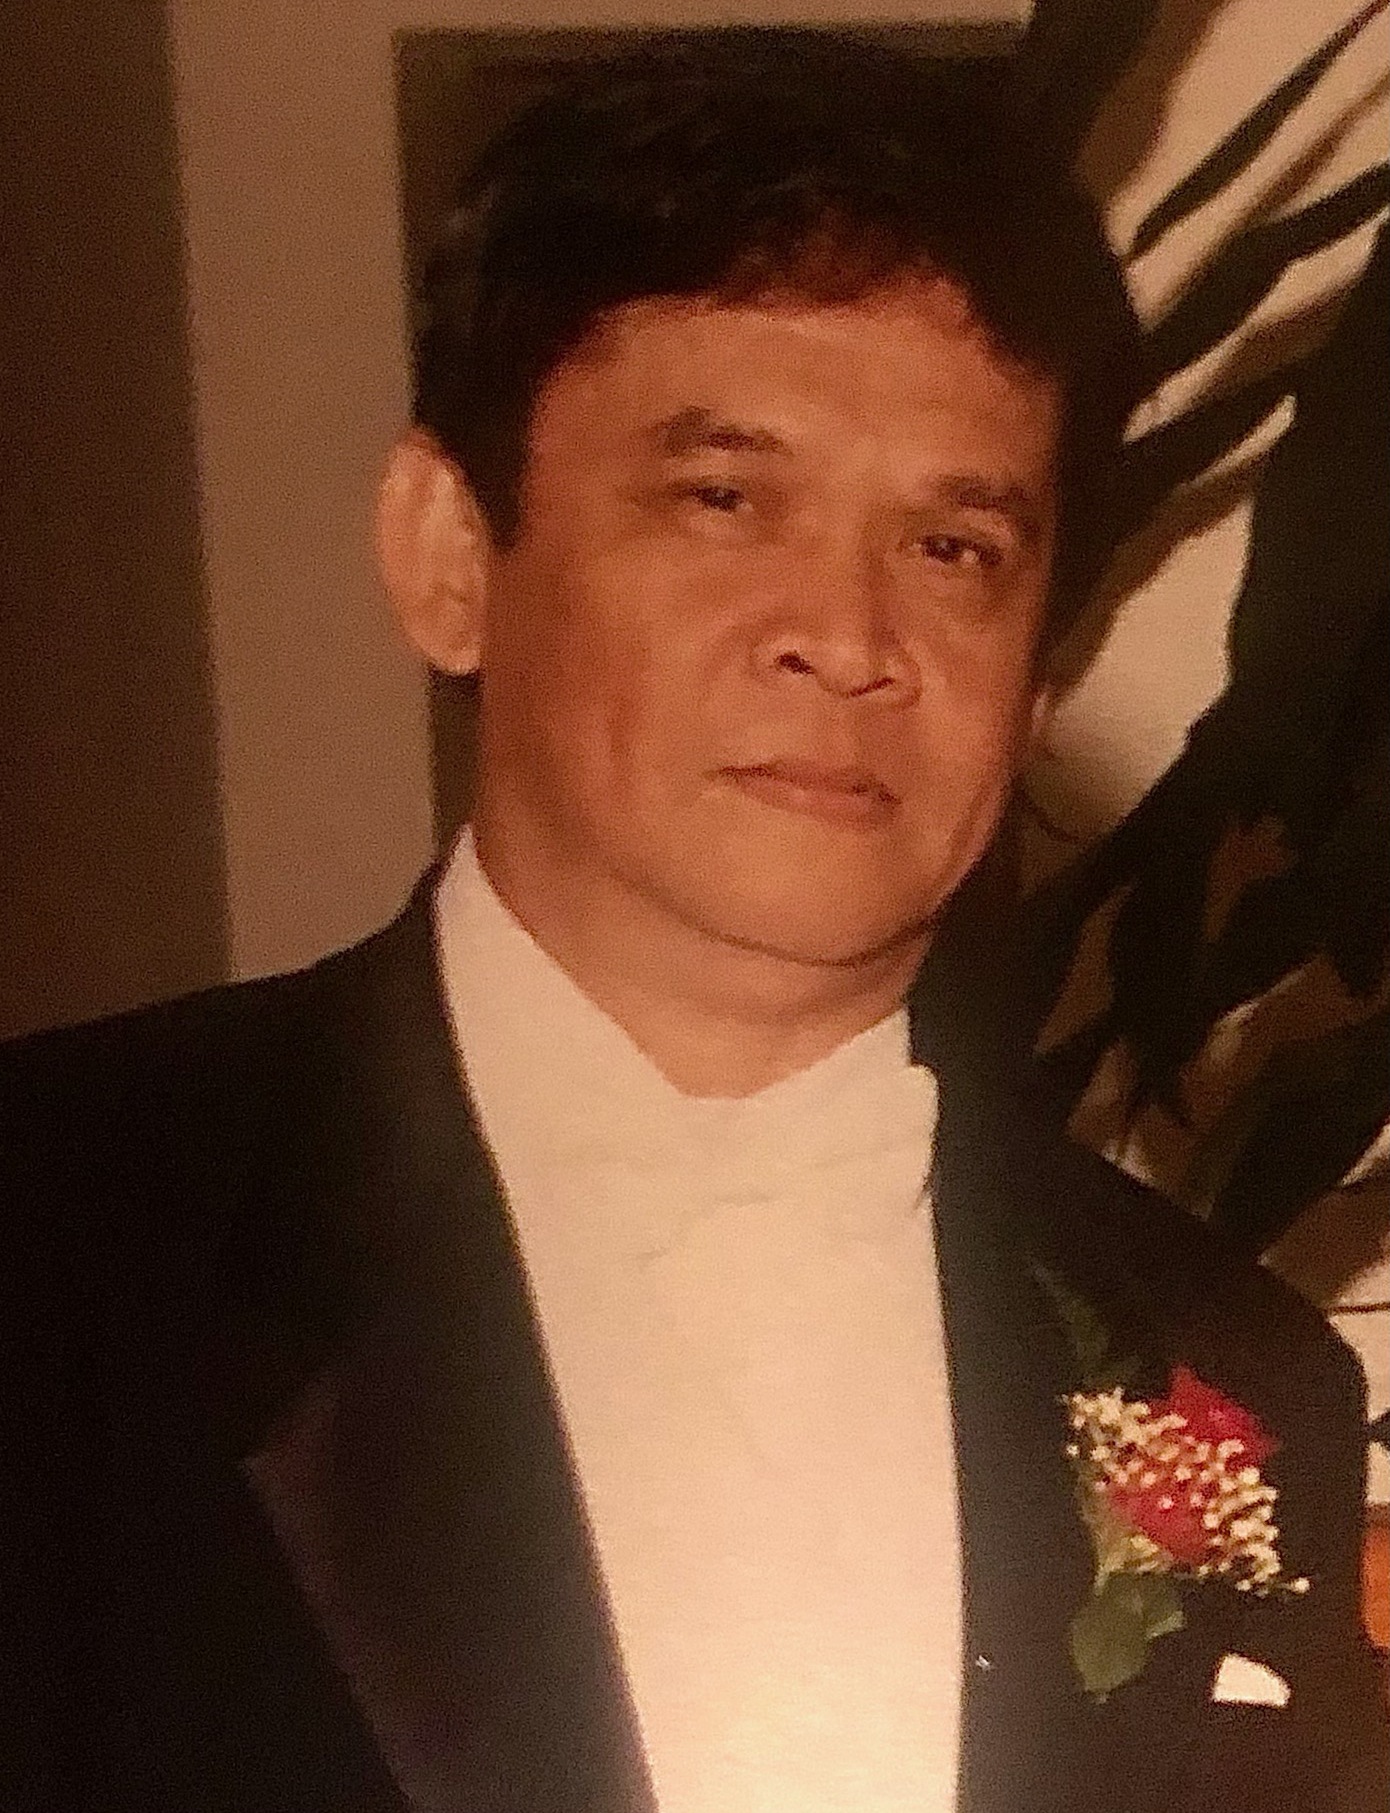 Mr. Cirilo Ilagan